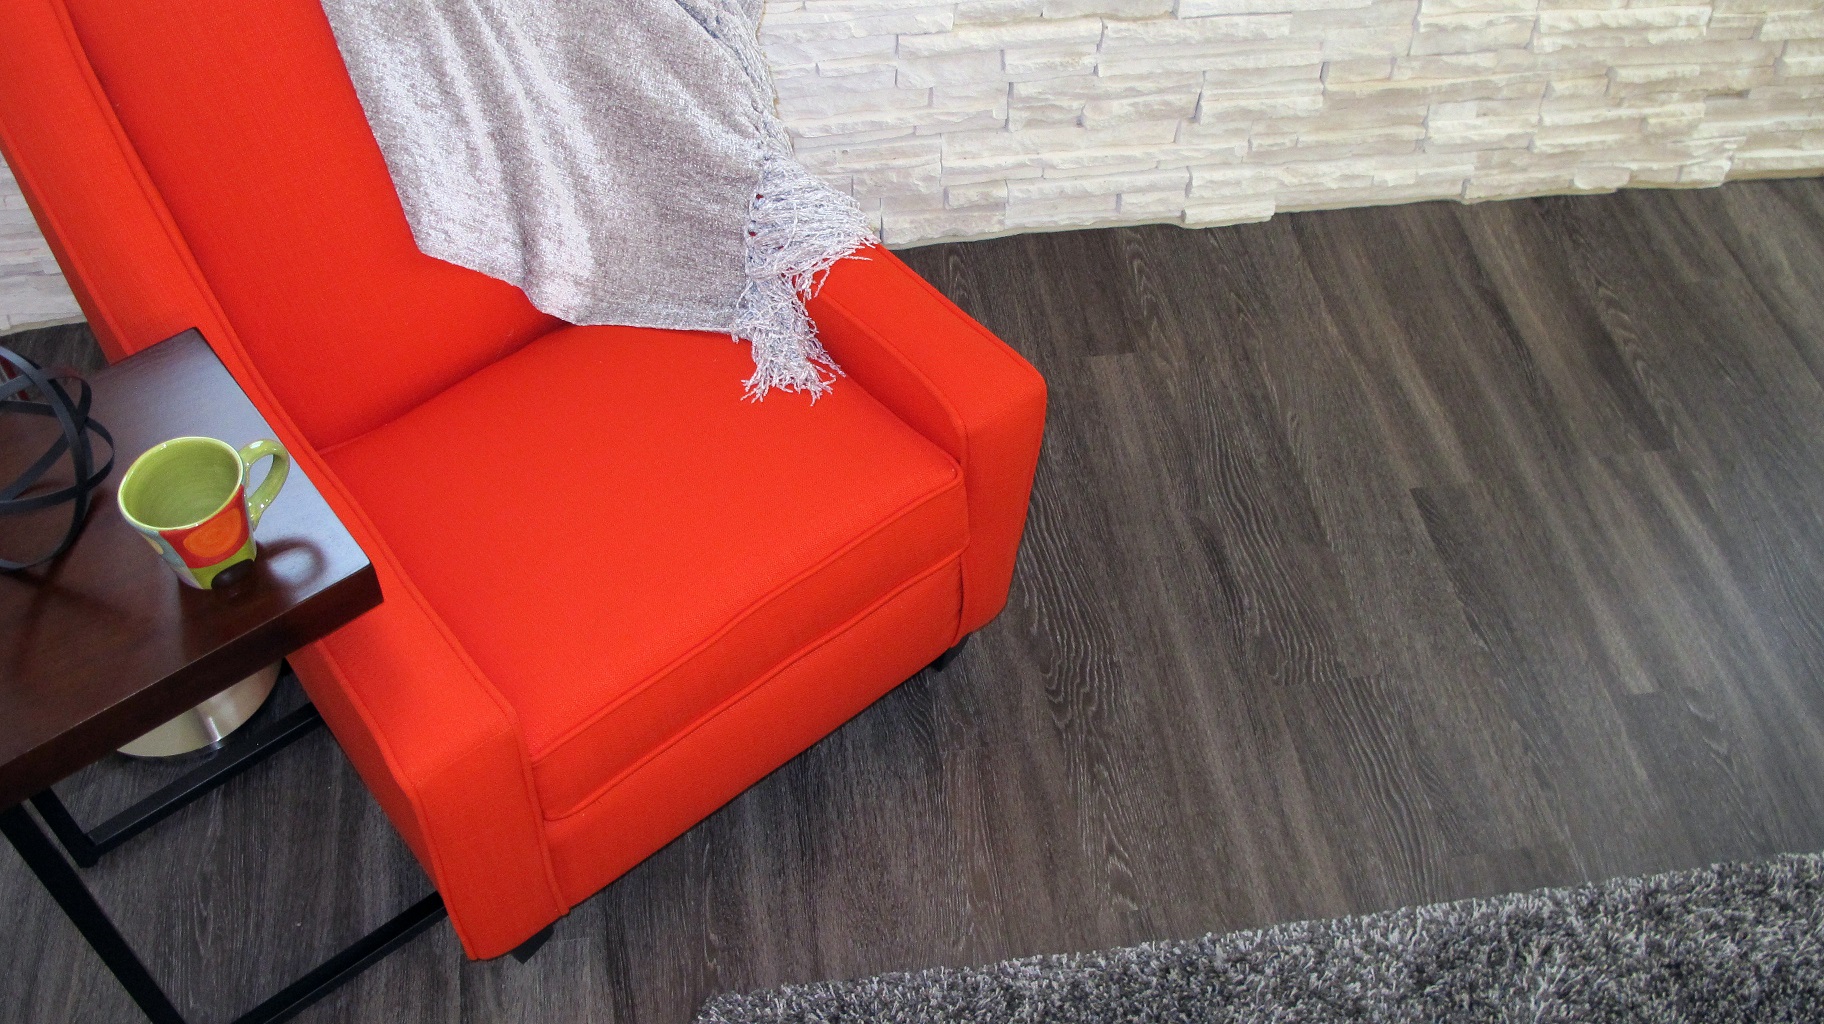 Luxury vinyl plank LVP shaw resilient Harwich Raven floating installation stone masonry white orange chair bright area rug